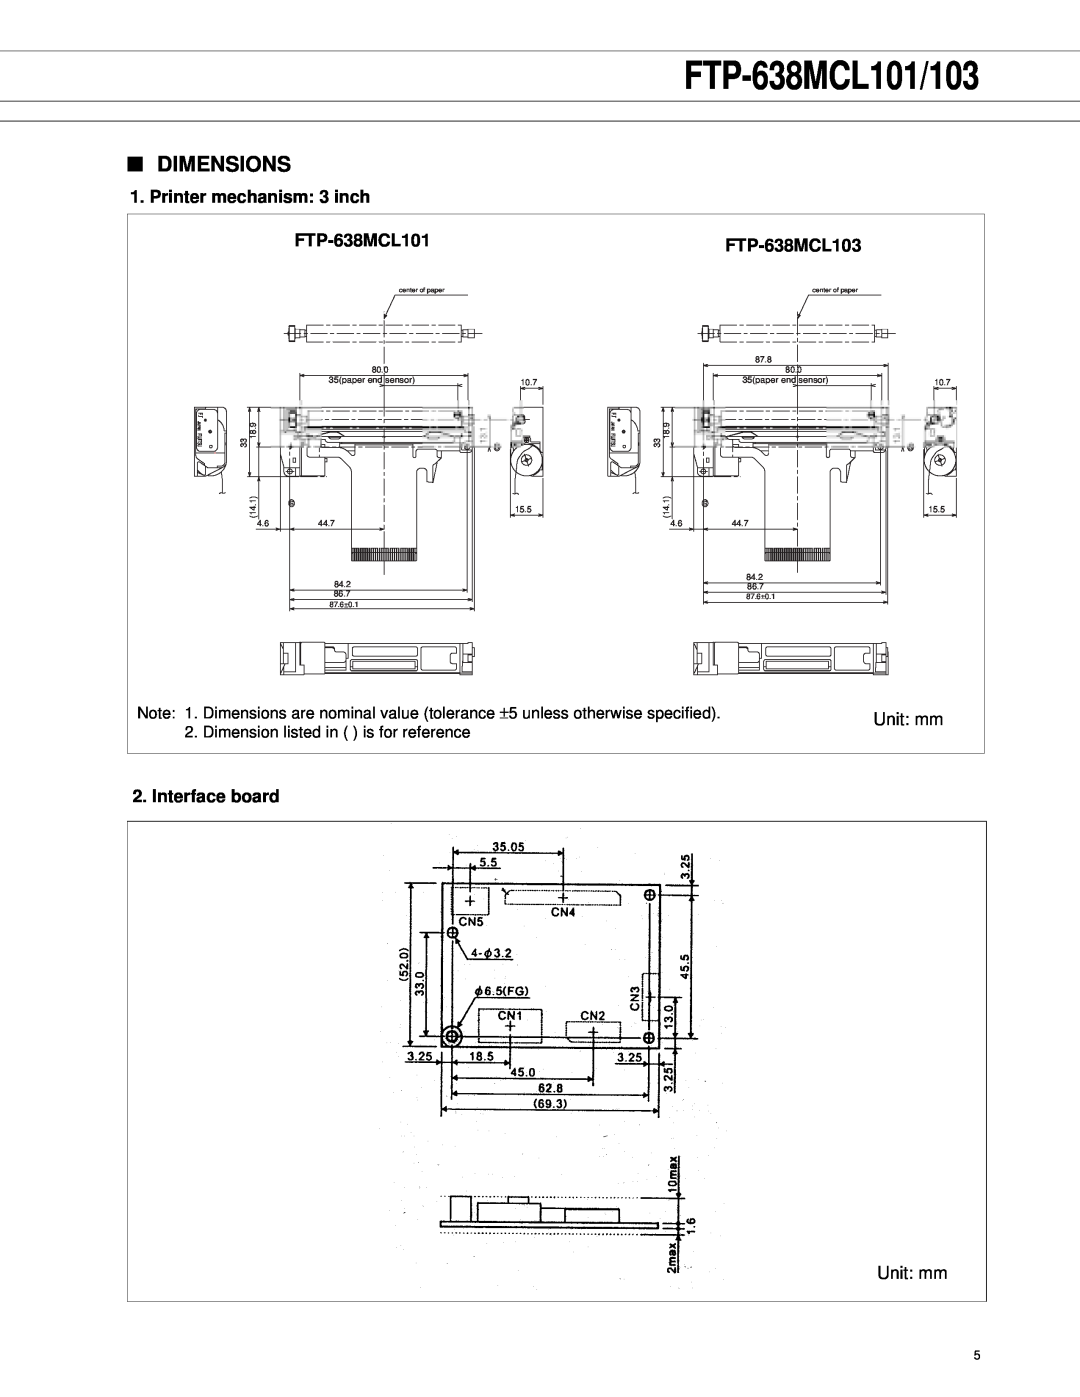 Fujitsu FTP-638MCL103 manual Dimensions, FTP-638MCL101/103, Printer mechanism 3 inch FTP-638MCL101, Interface board 